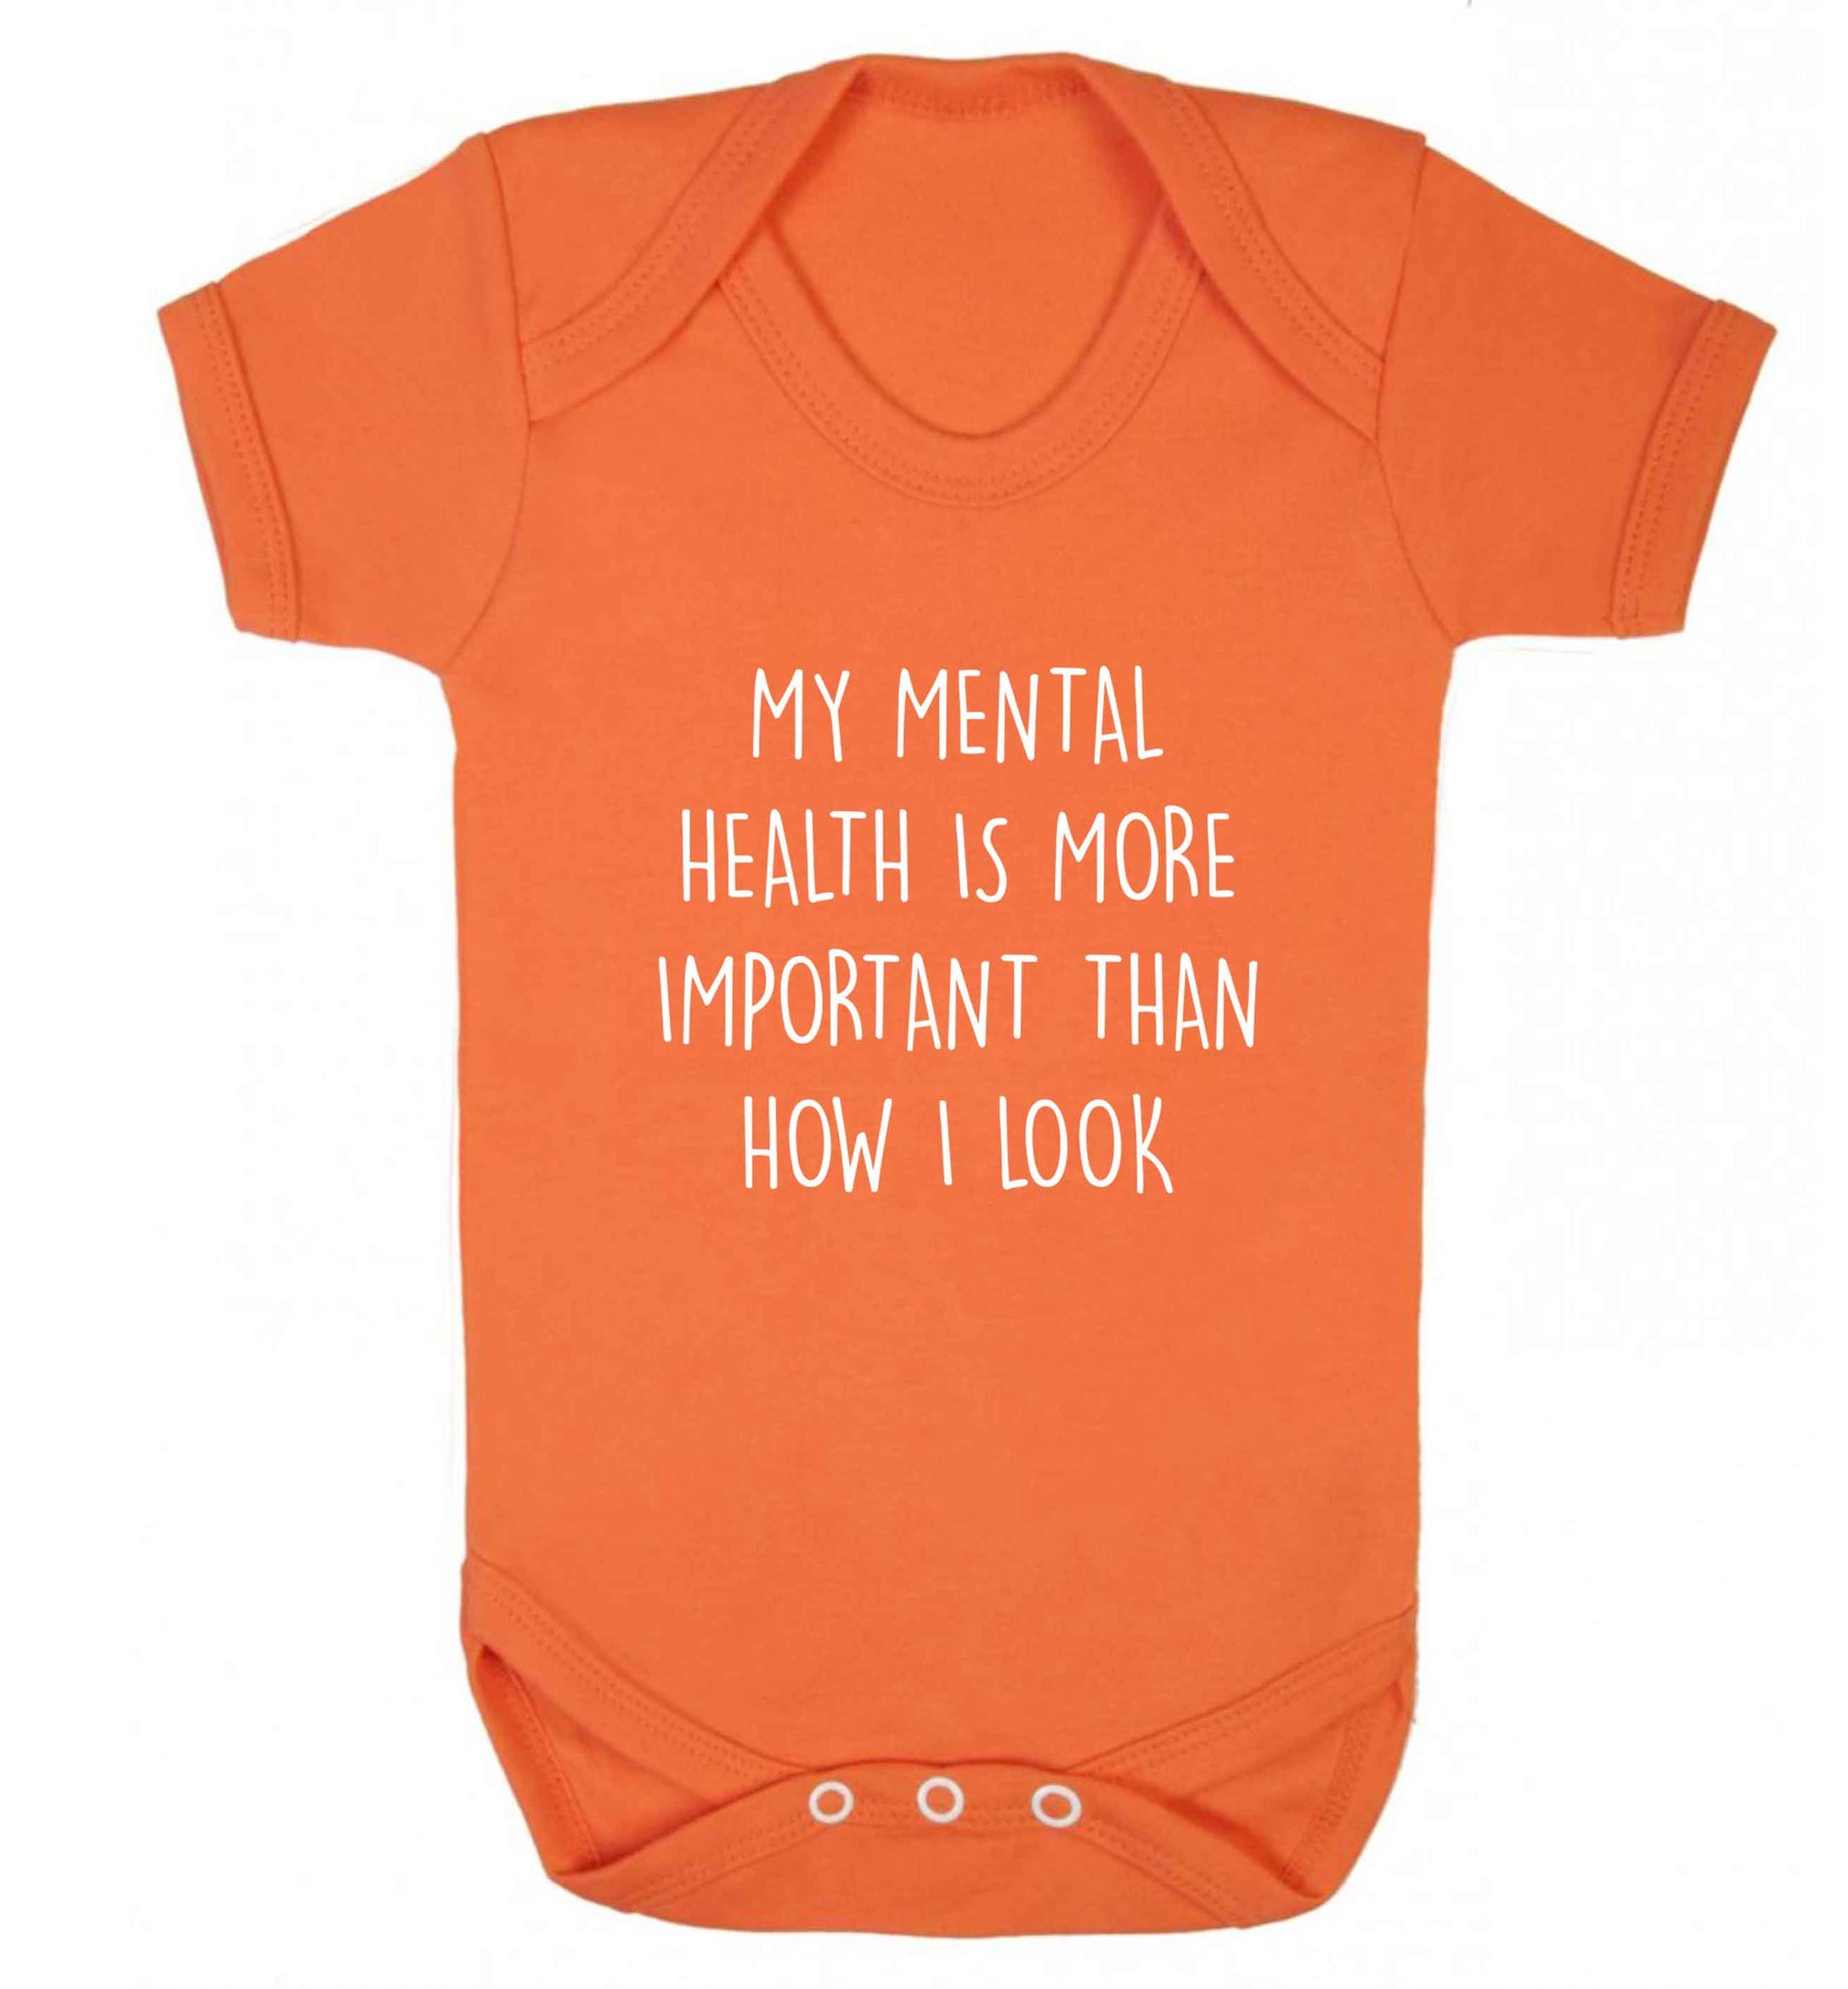 My mental health is more importnat than how I look baby vest orange 18-24 months